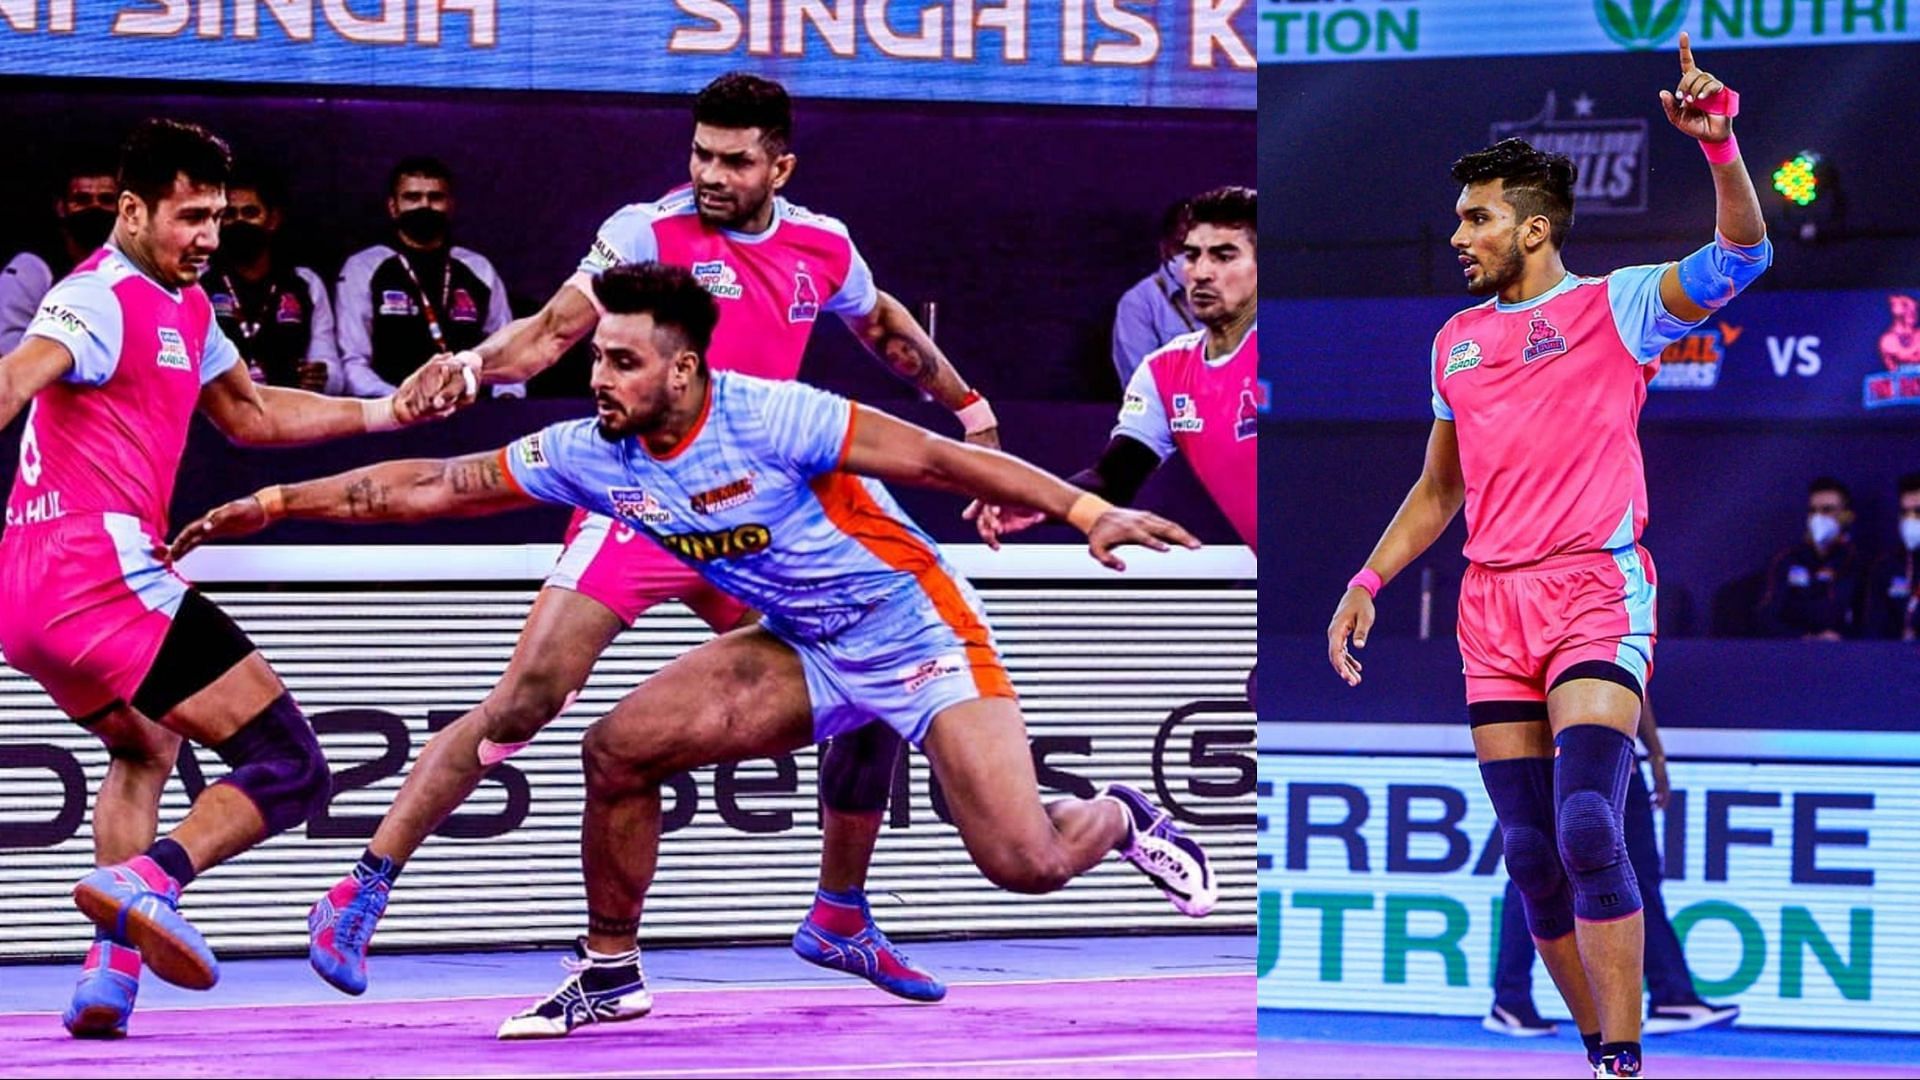 Maninder Singh (in blue) and Arjun Deshwal (R) performed brilliantly for their teams in Pro Kabaddi 2021 last week (Image: Instagram/Pro Kabaddi)